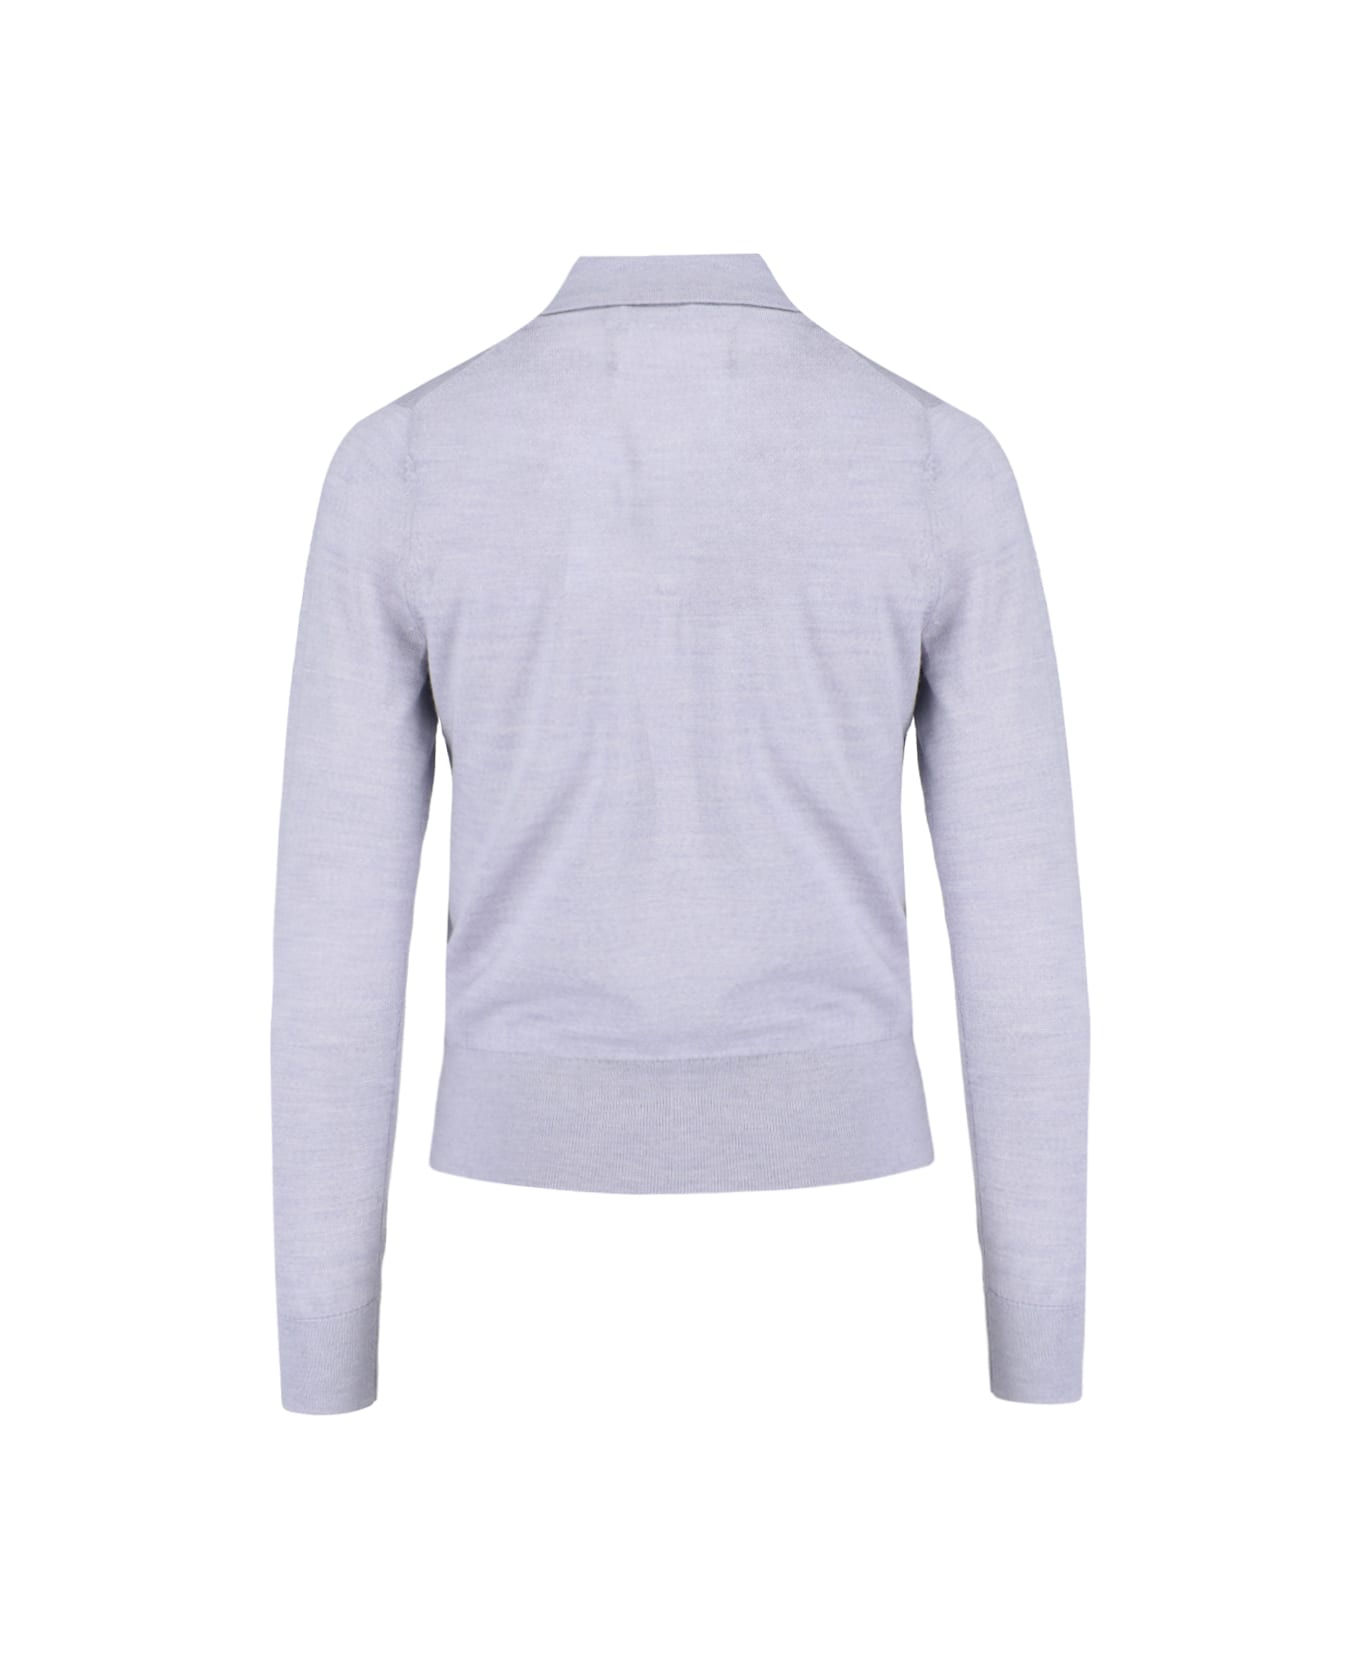 Calvin Klein Wool Shirt - Gray